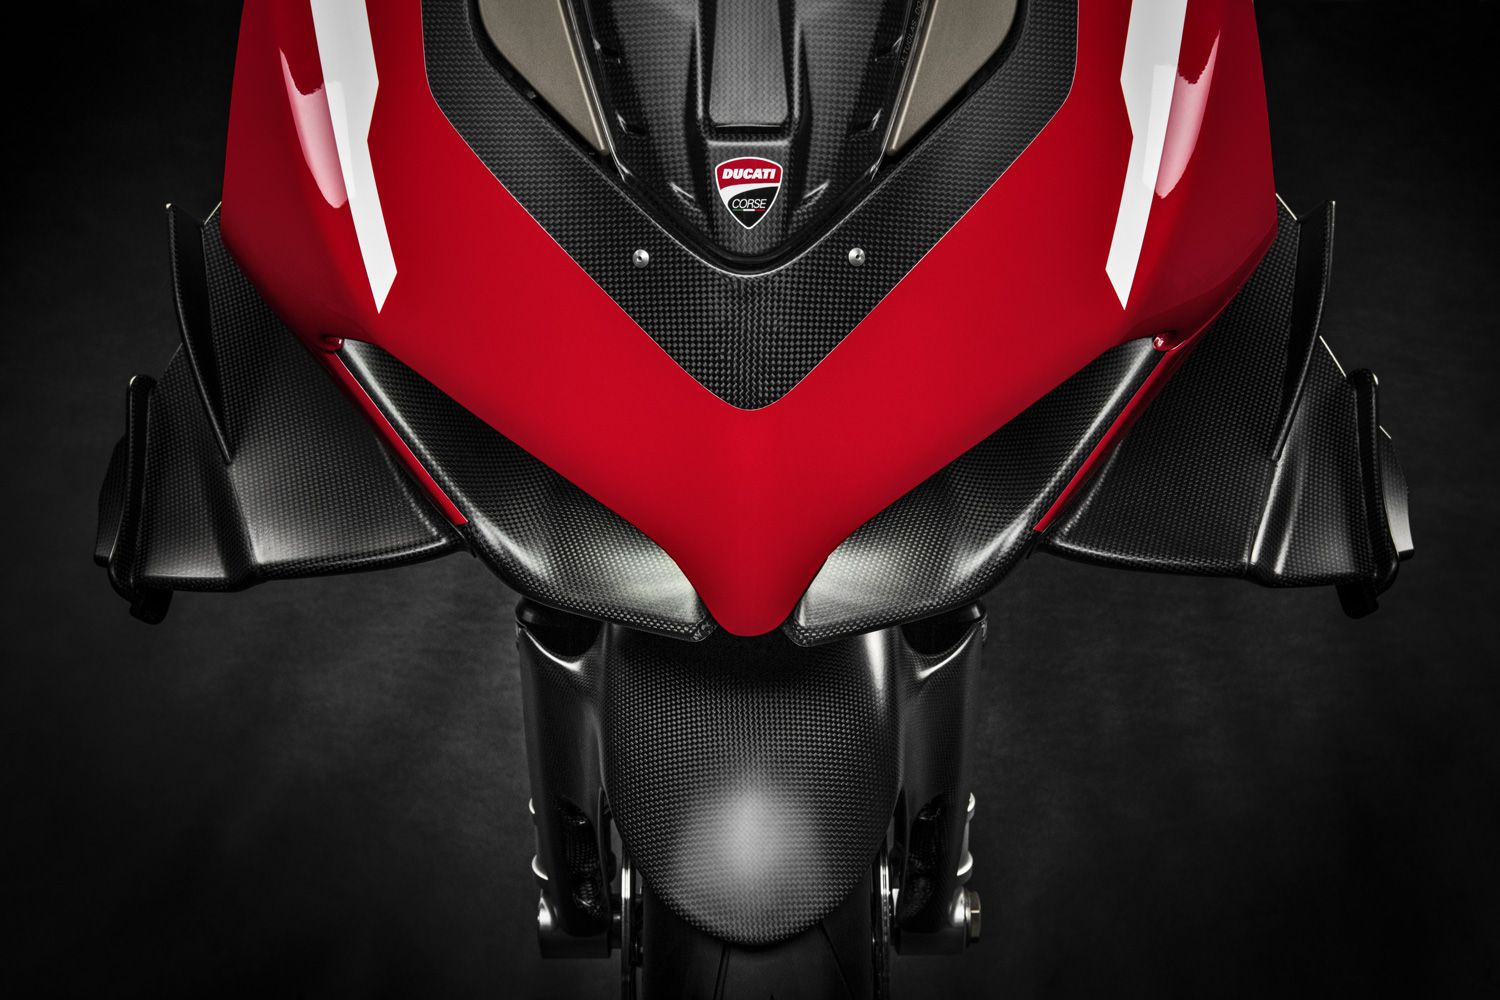 Ducati S Superleggera V4 First Look Cycle World